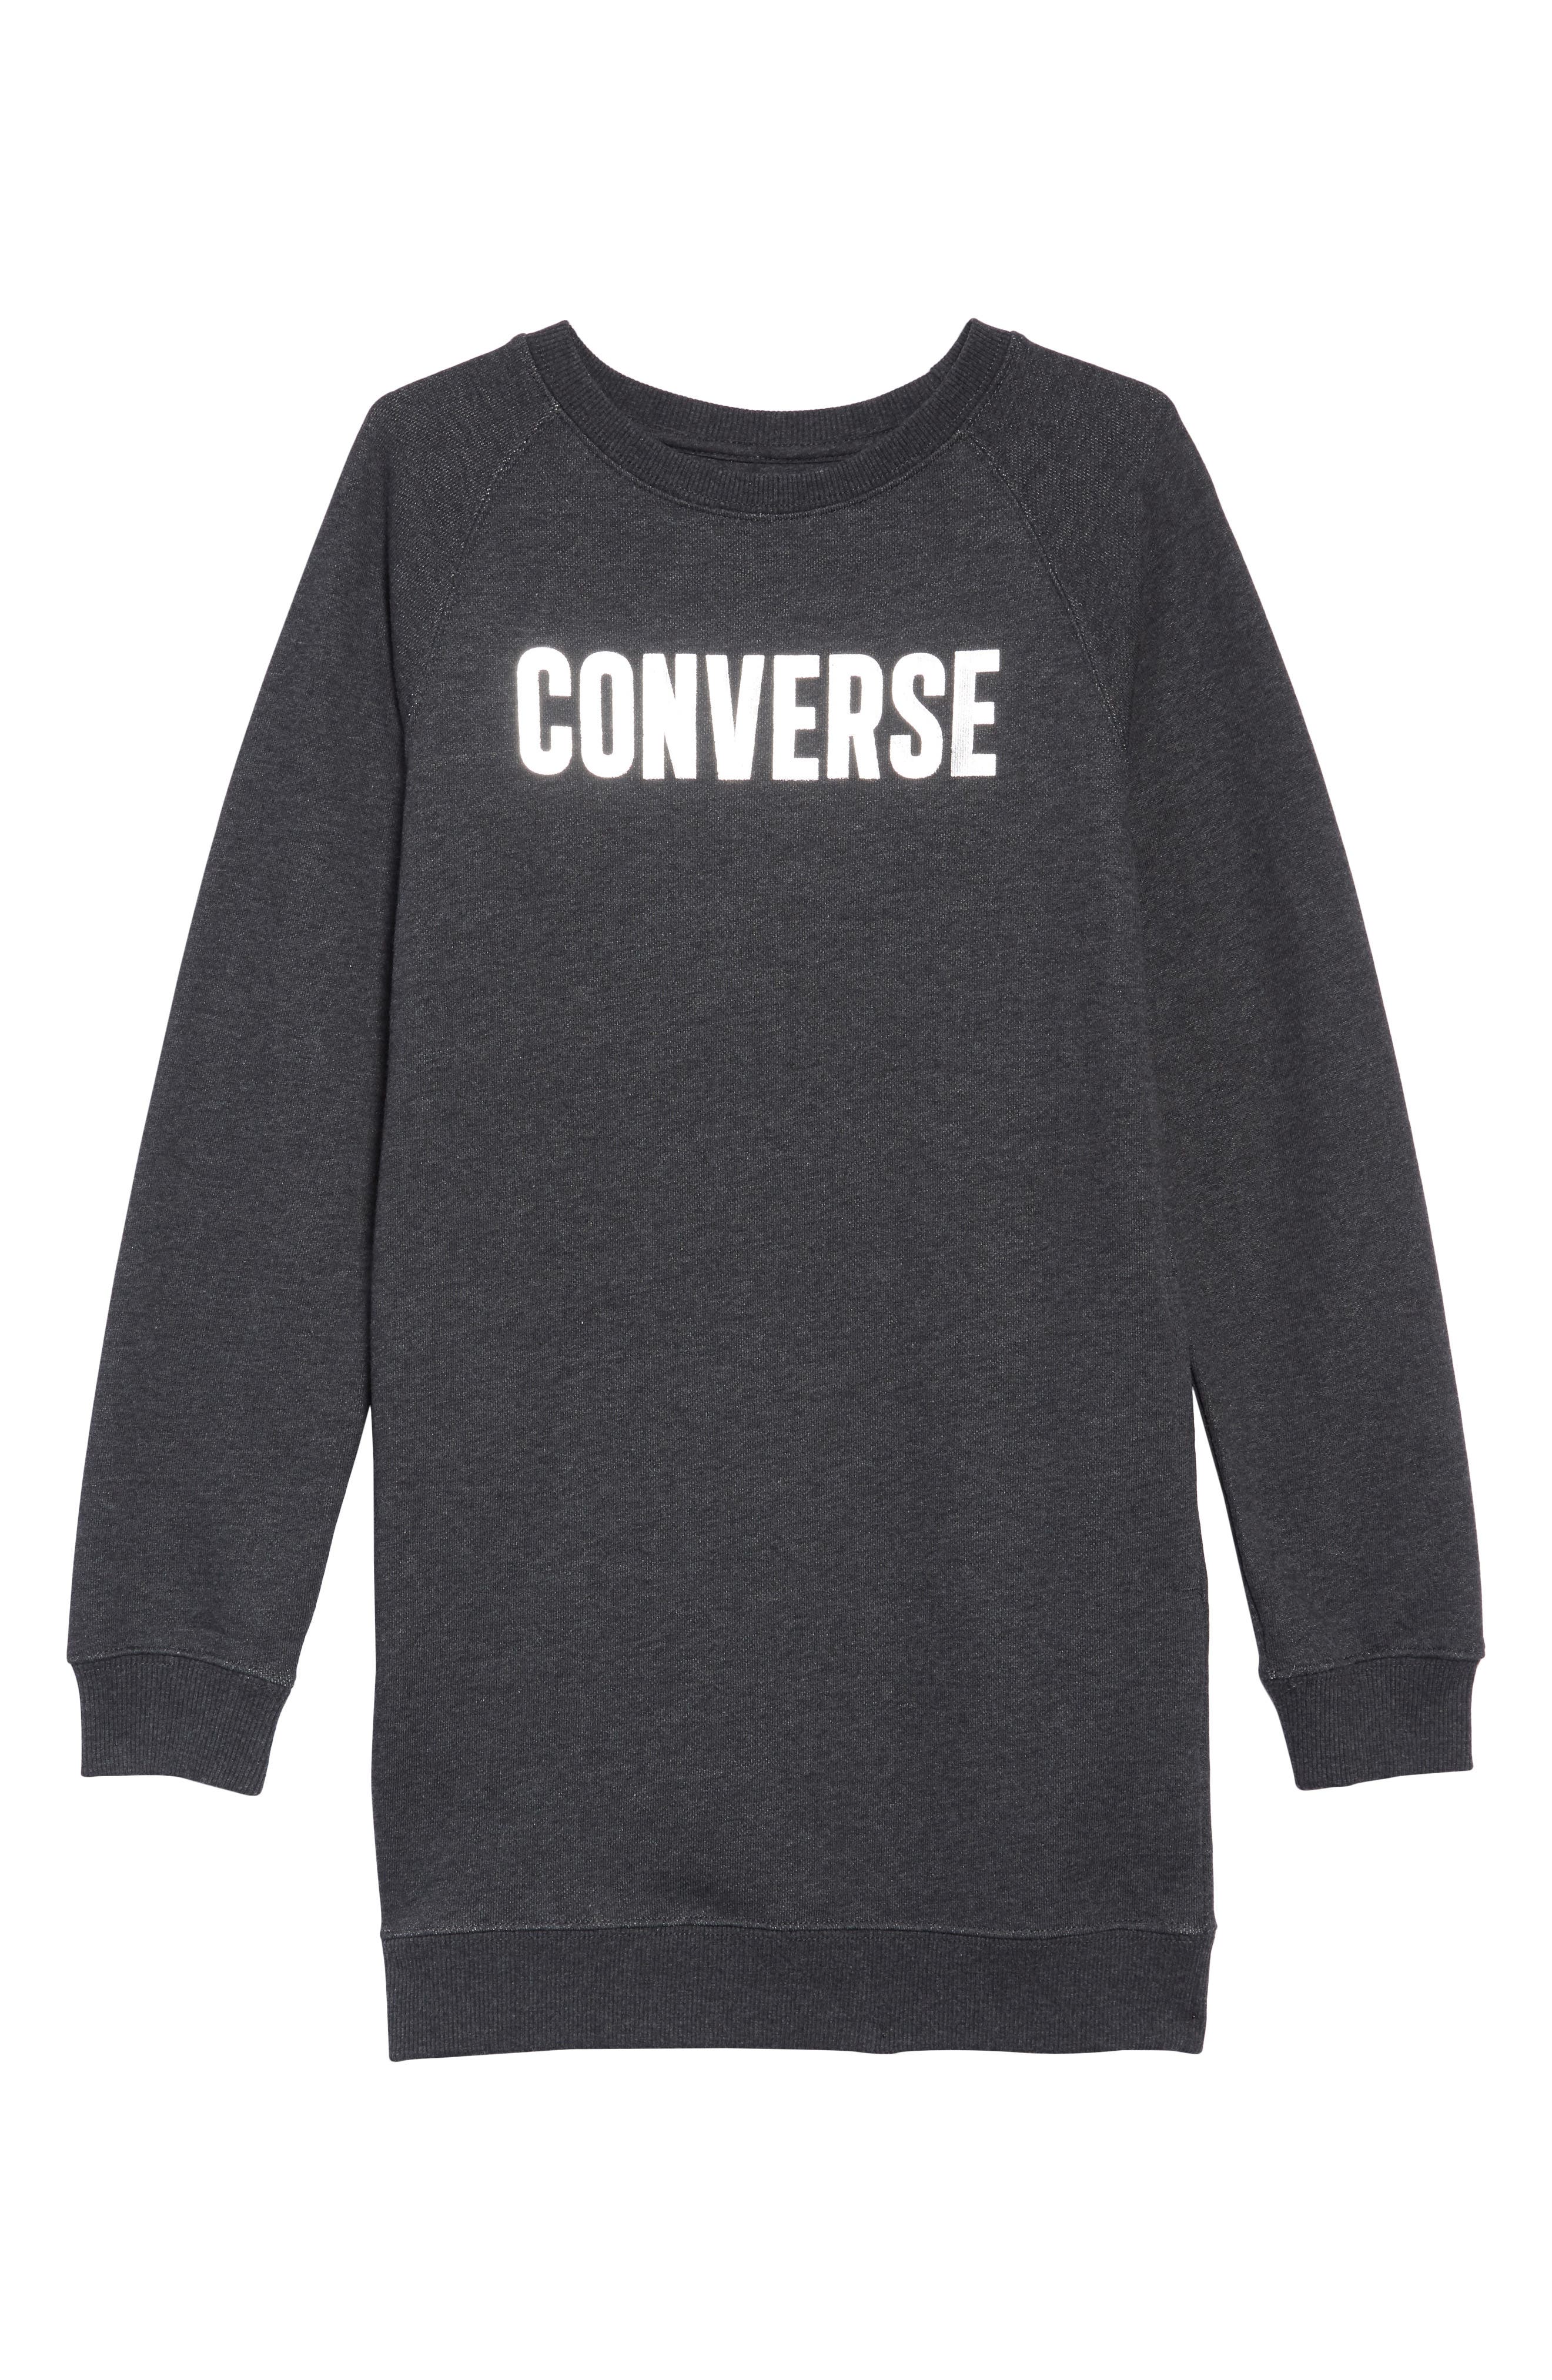 Converse Sweatshirt Dress (Big Girls 